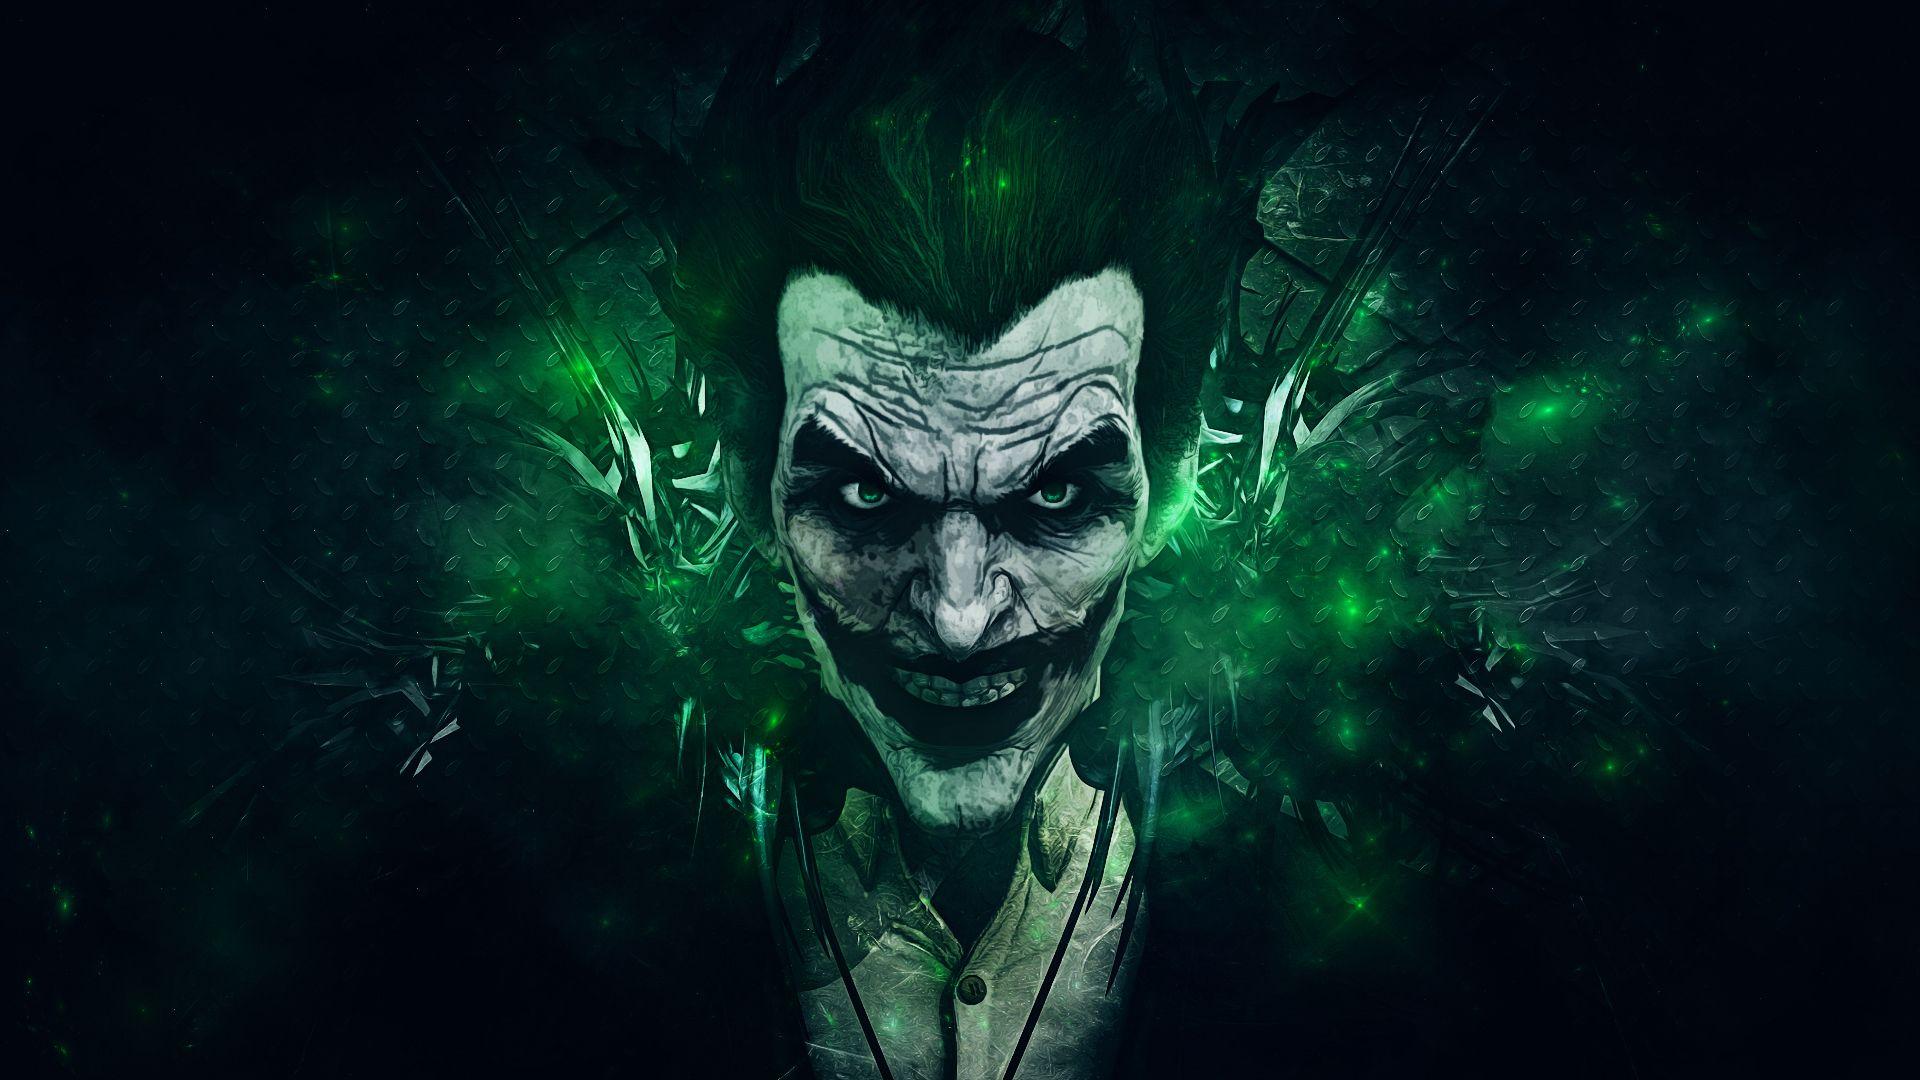 Green Joker Wallpapers - Top Free Green ...